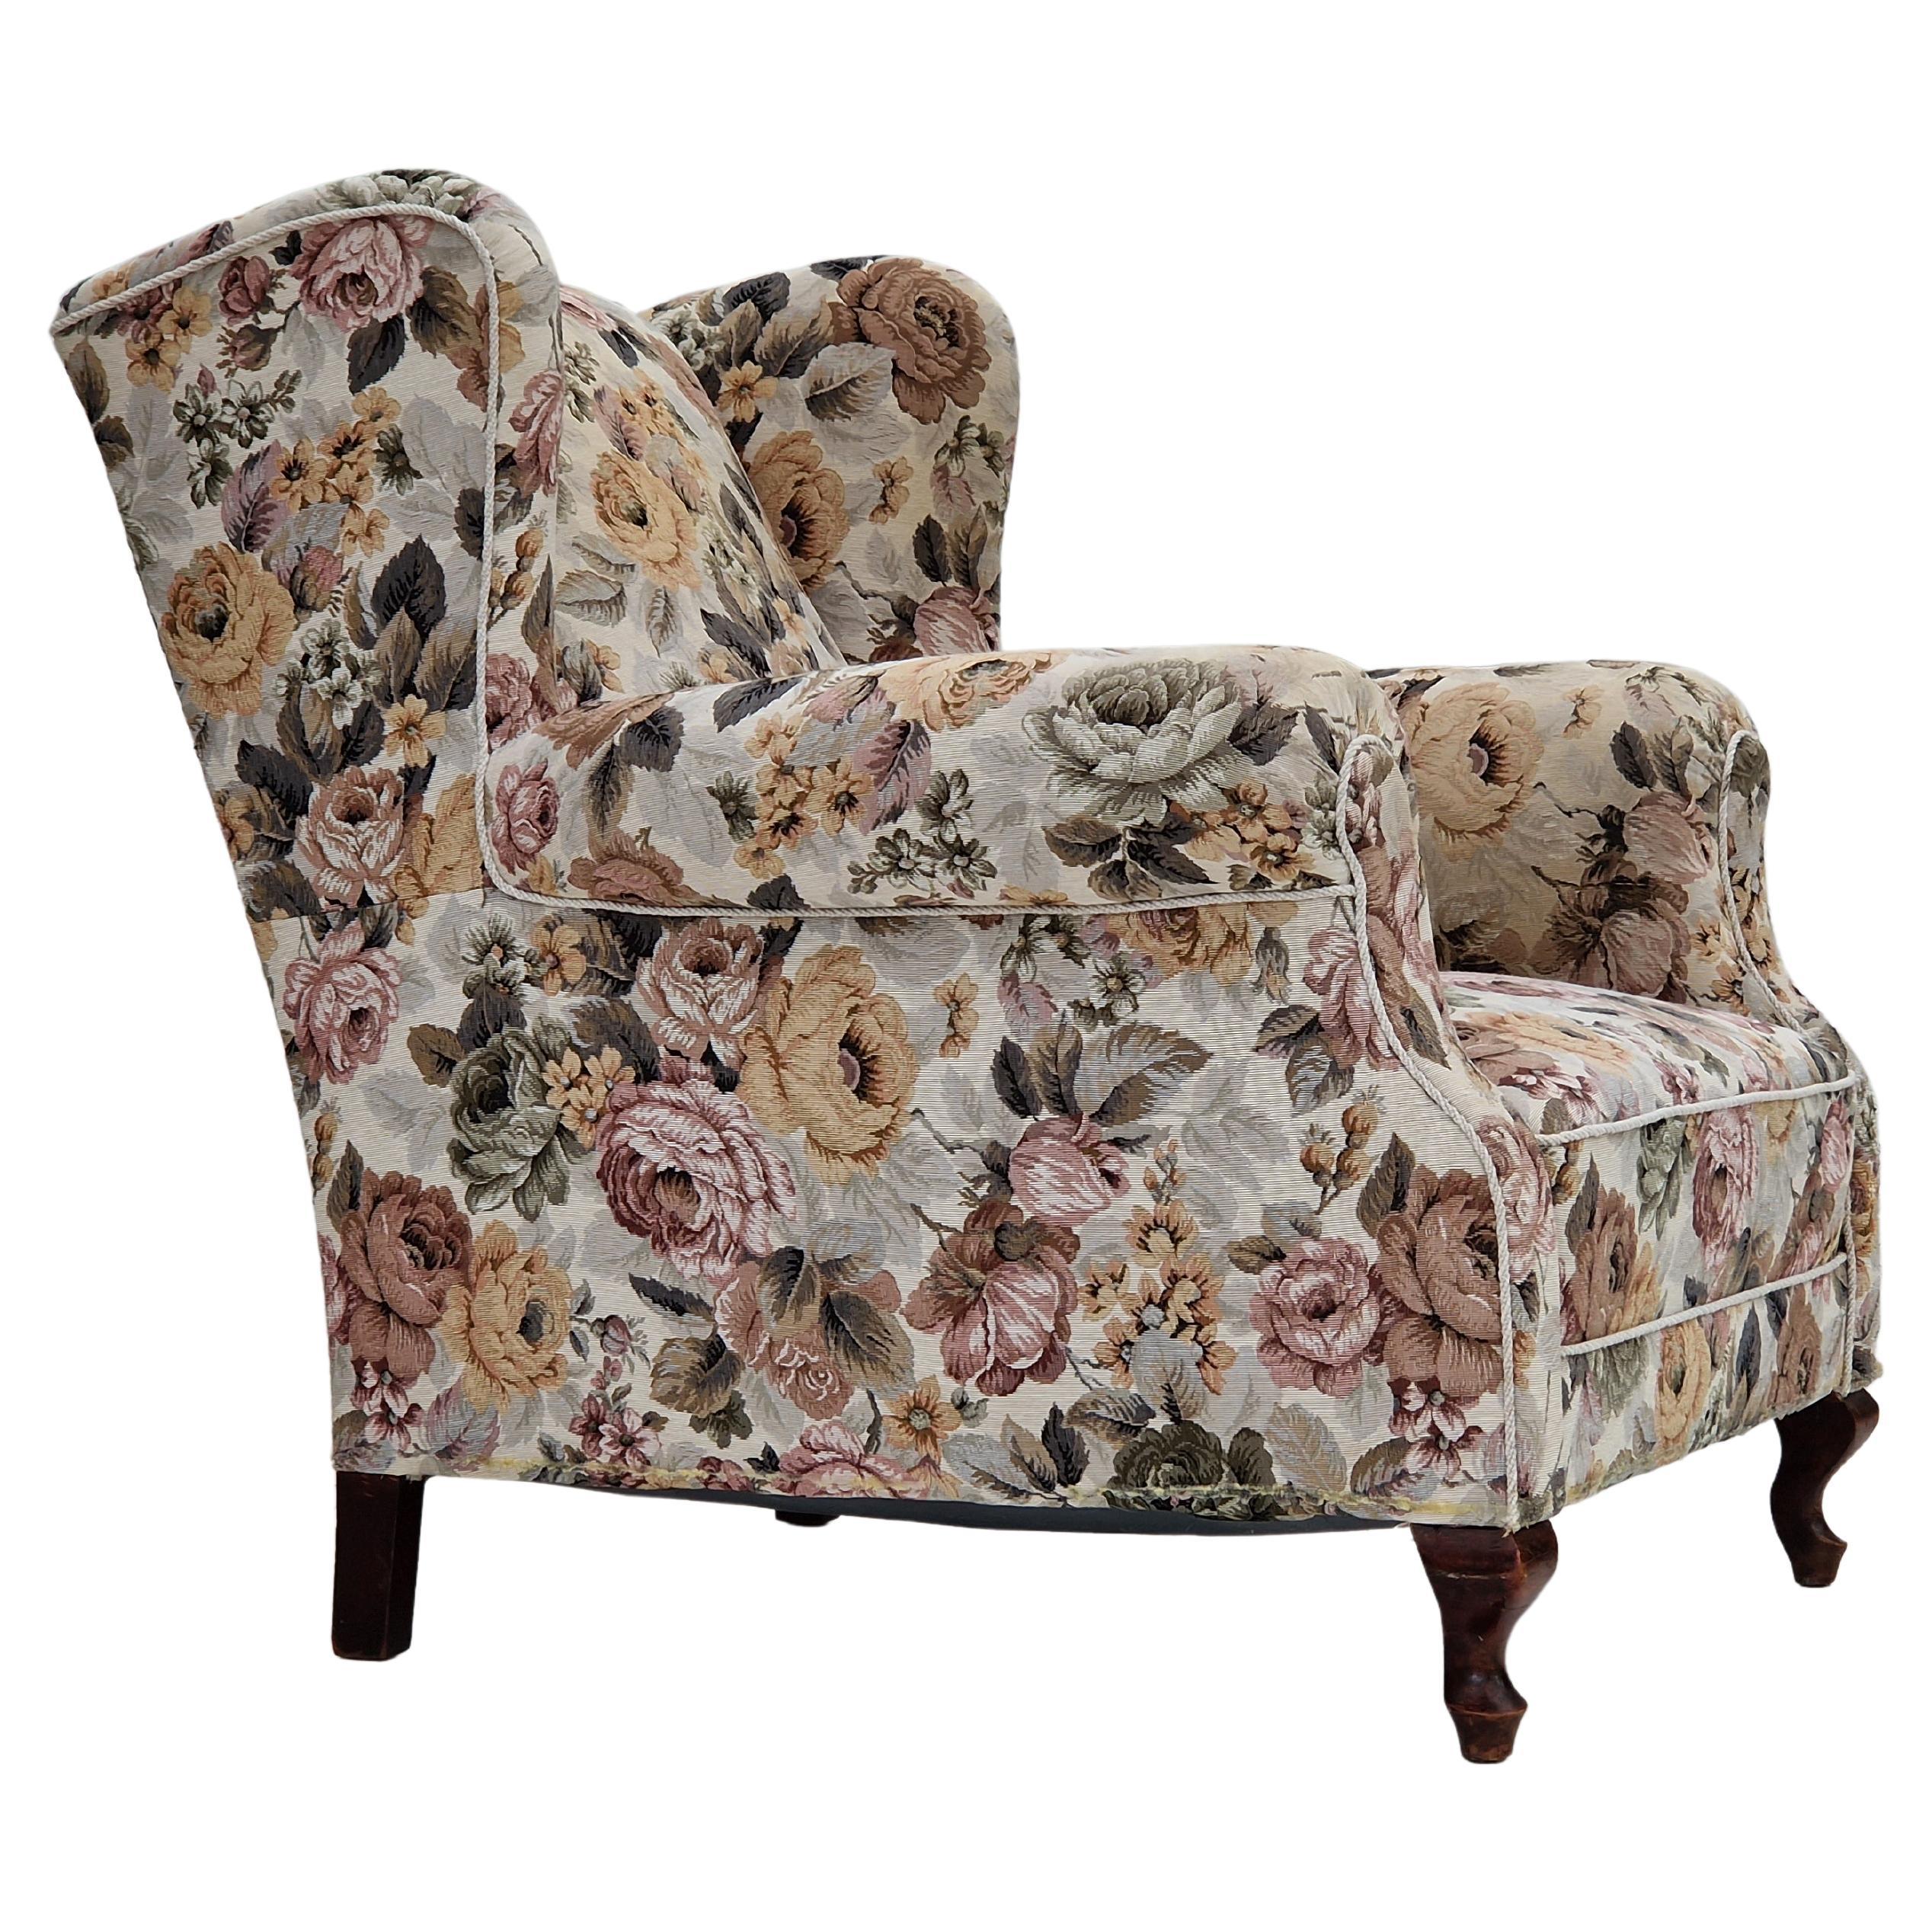 1950s, Danish vintage relax chair in "flowers" fabric, original condition. en vente